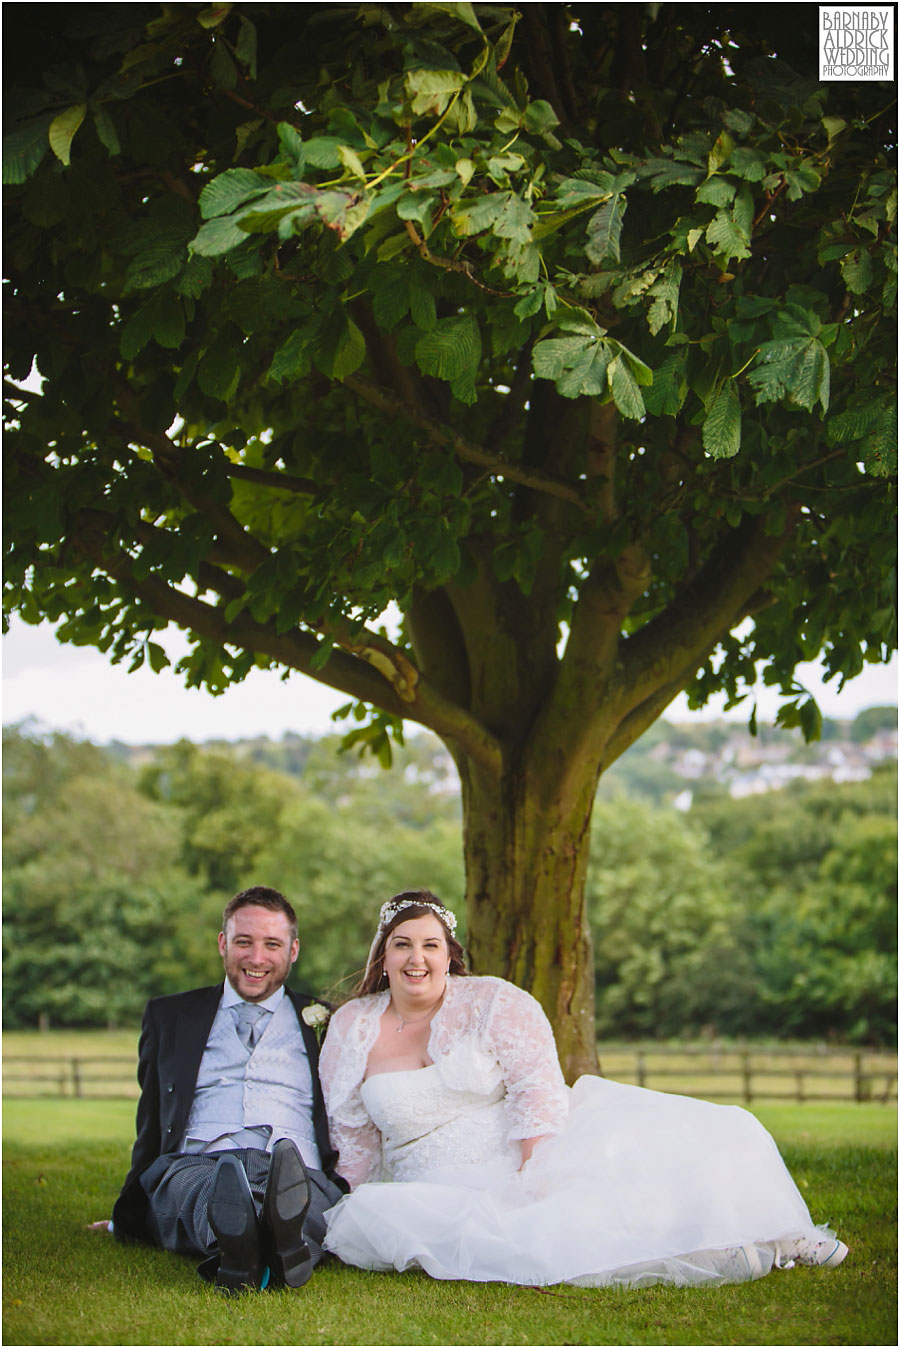 Wood Hall Wetherby Wedding Photography,Wood Hall Linton Wedding Photographer,Yorkshire Wedding Photographer Barnaby Aldrick,Wetherby Wedding Photography,